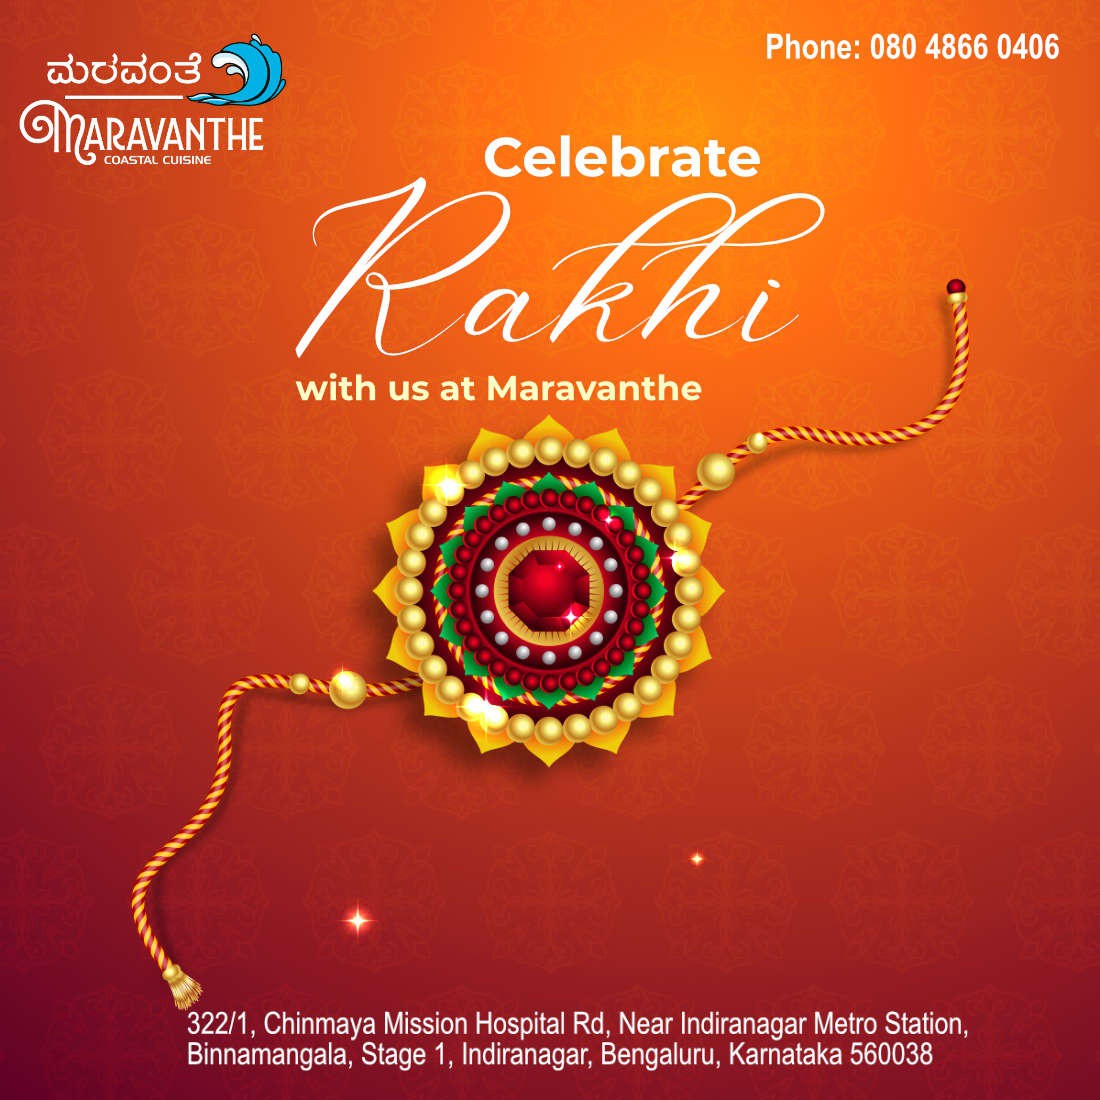 Social Media for Indian Festivals - Raksha Bandhan Rakhi Image 4